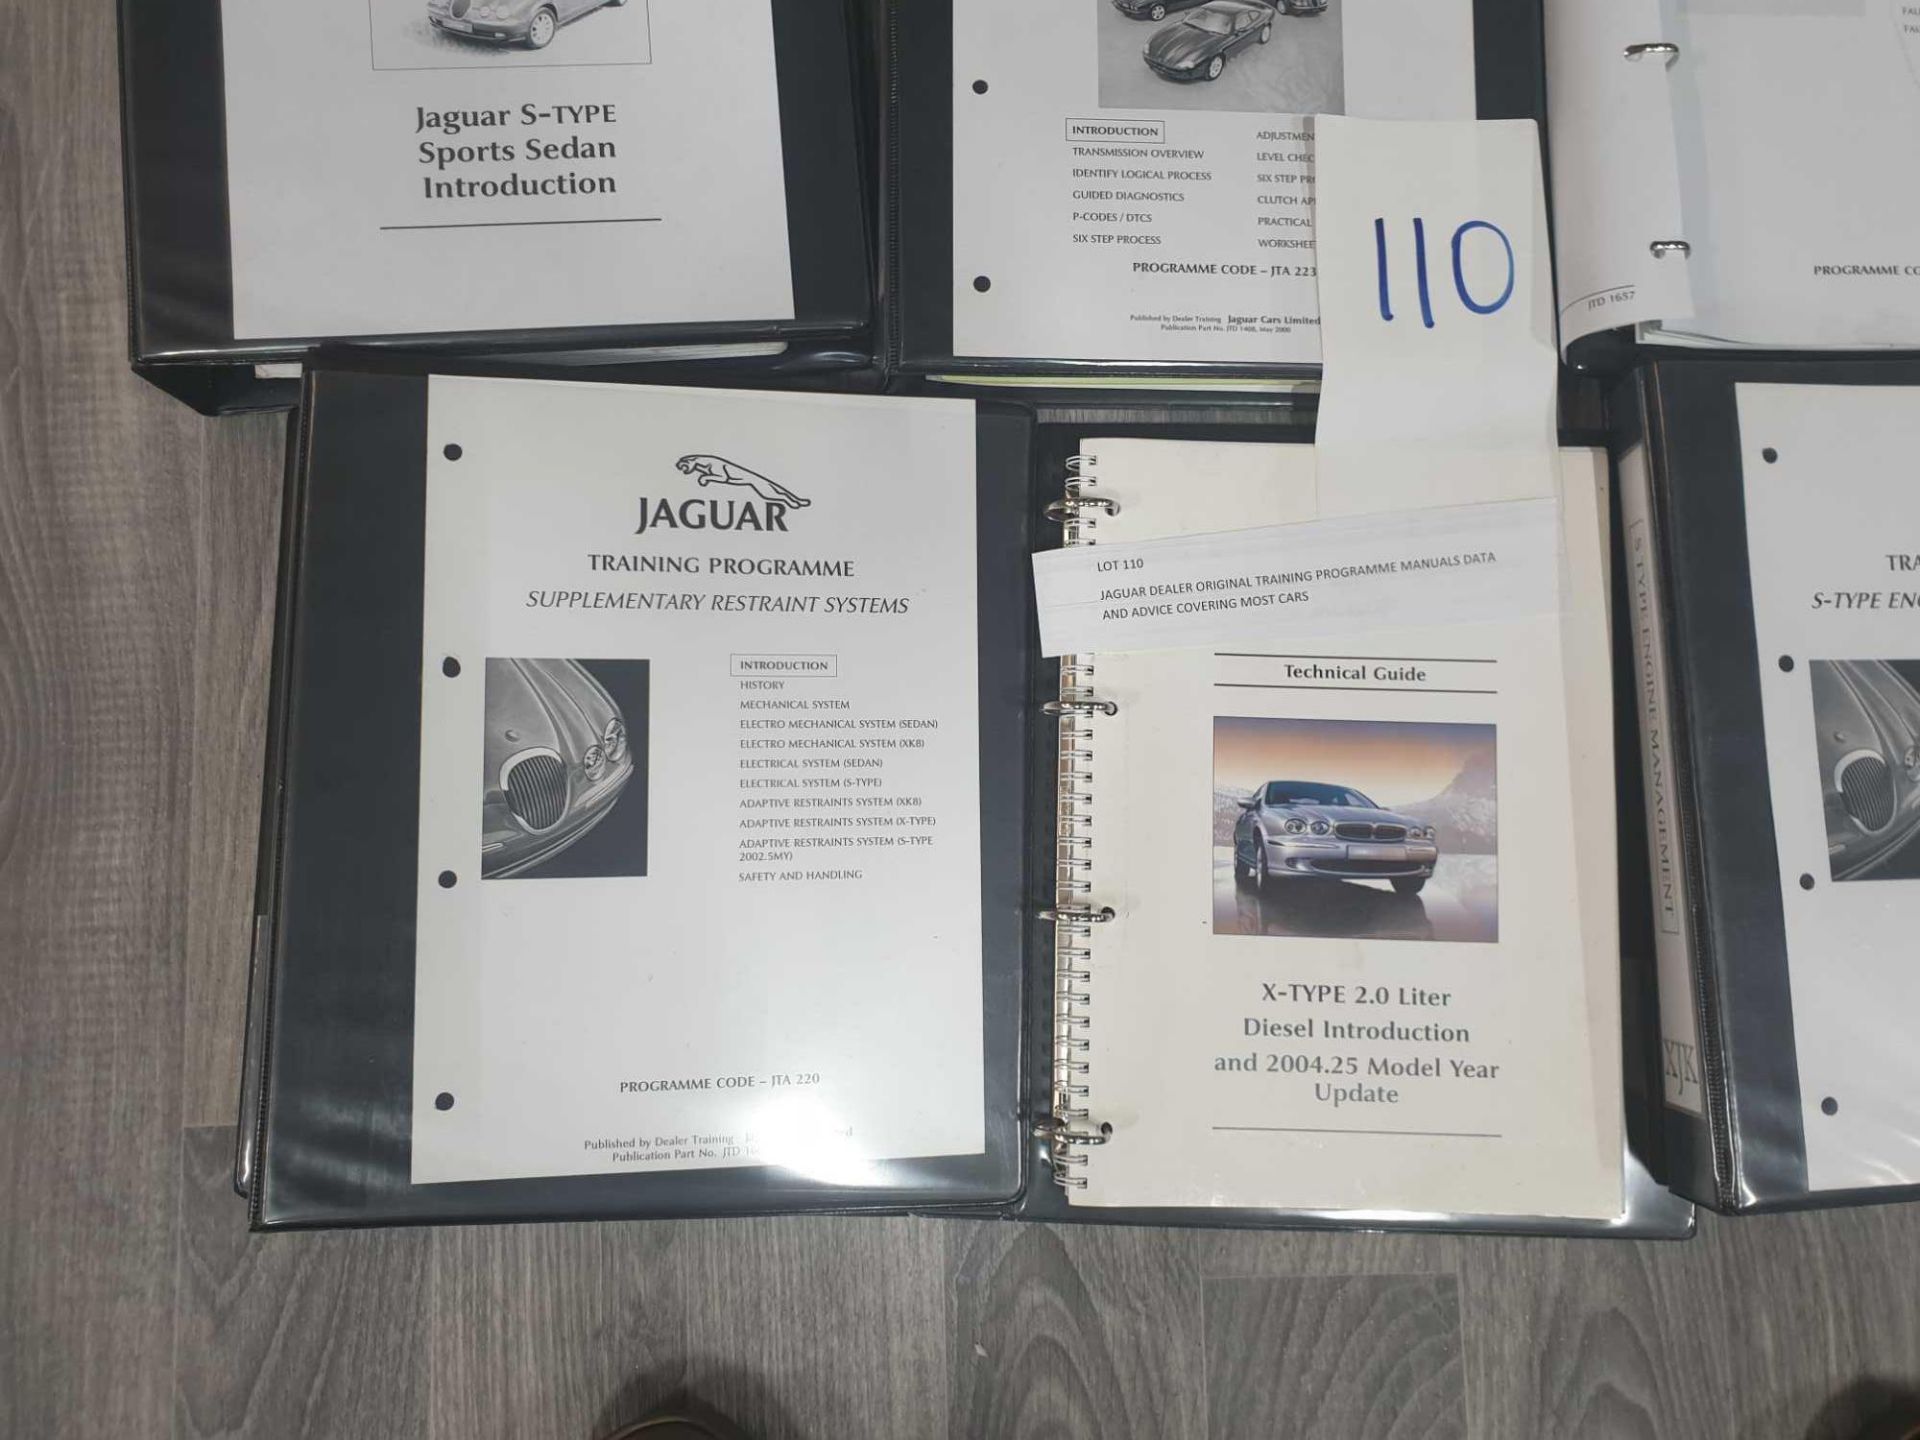 Jaguar dealer original training manuals data and advise covering most cores - Image 3 of 6